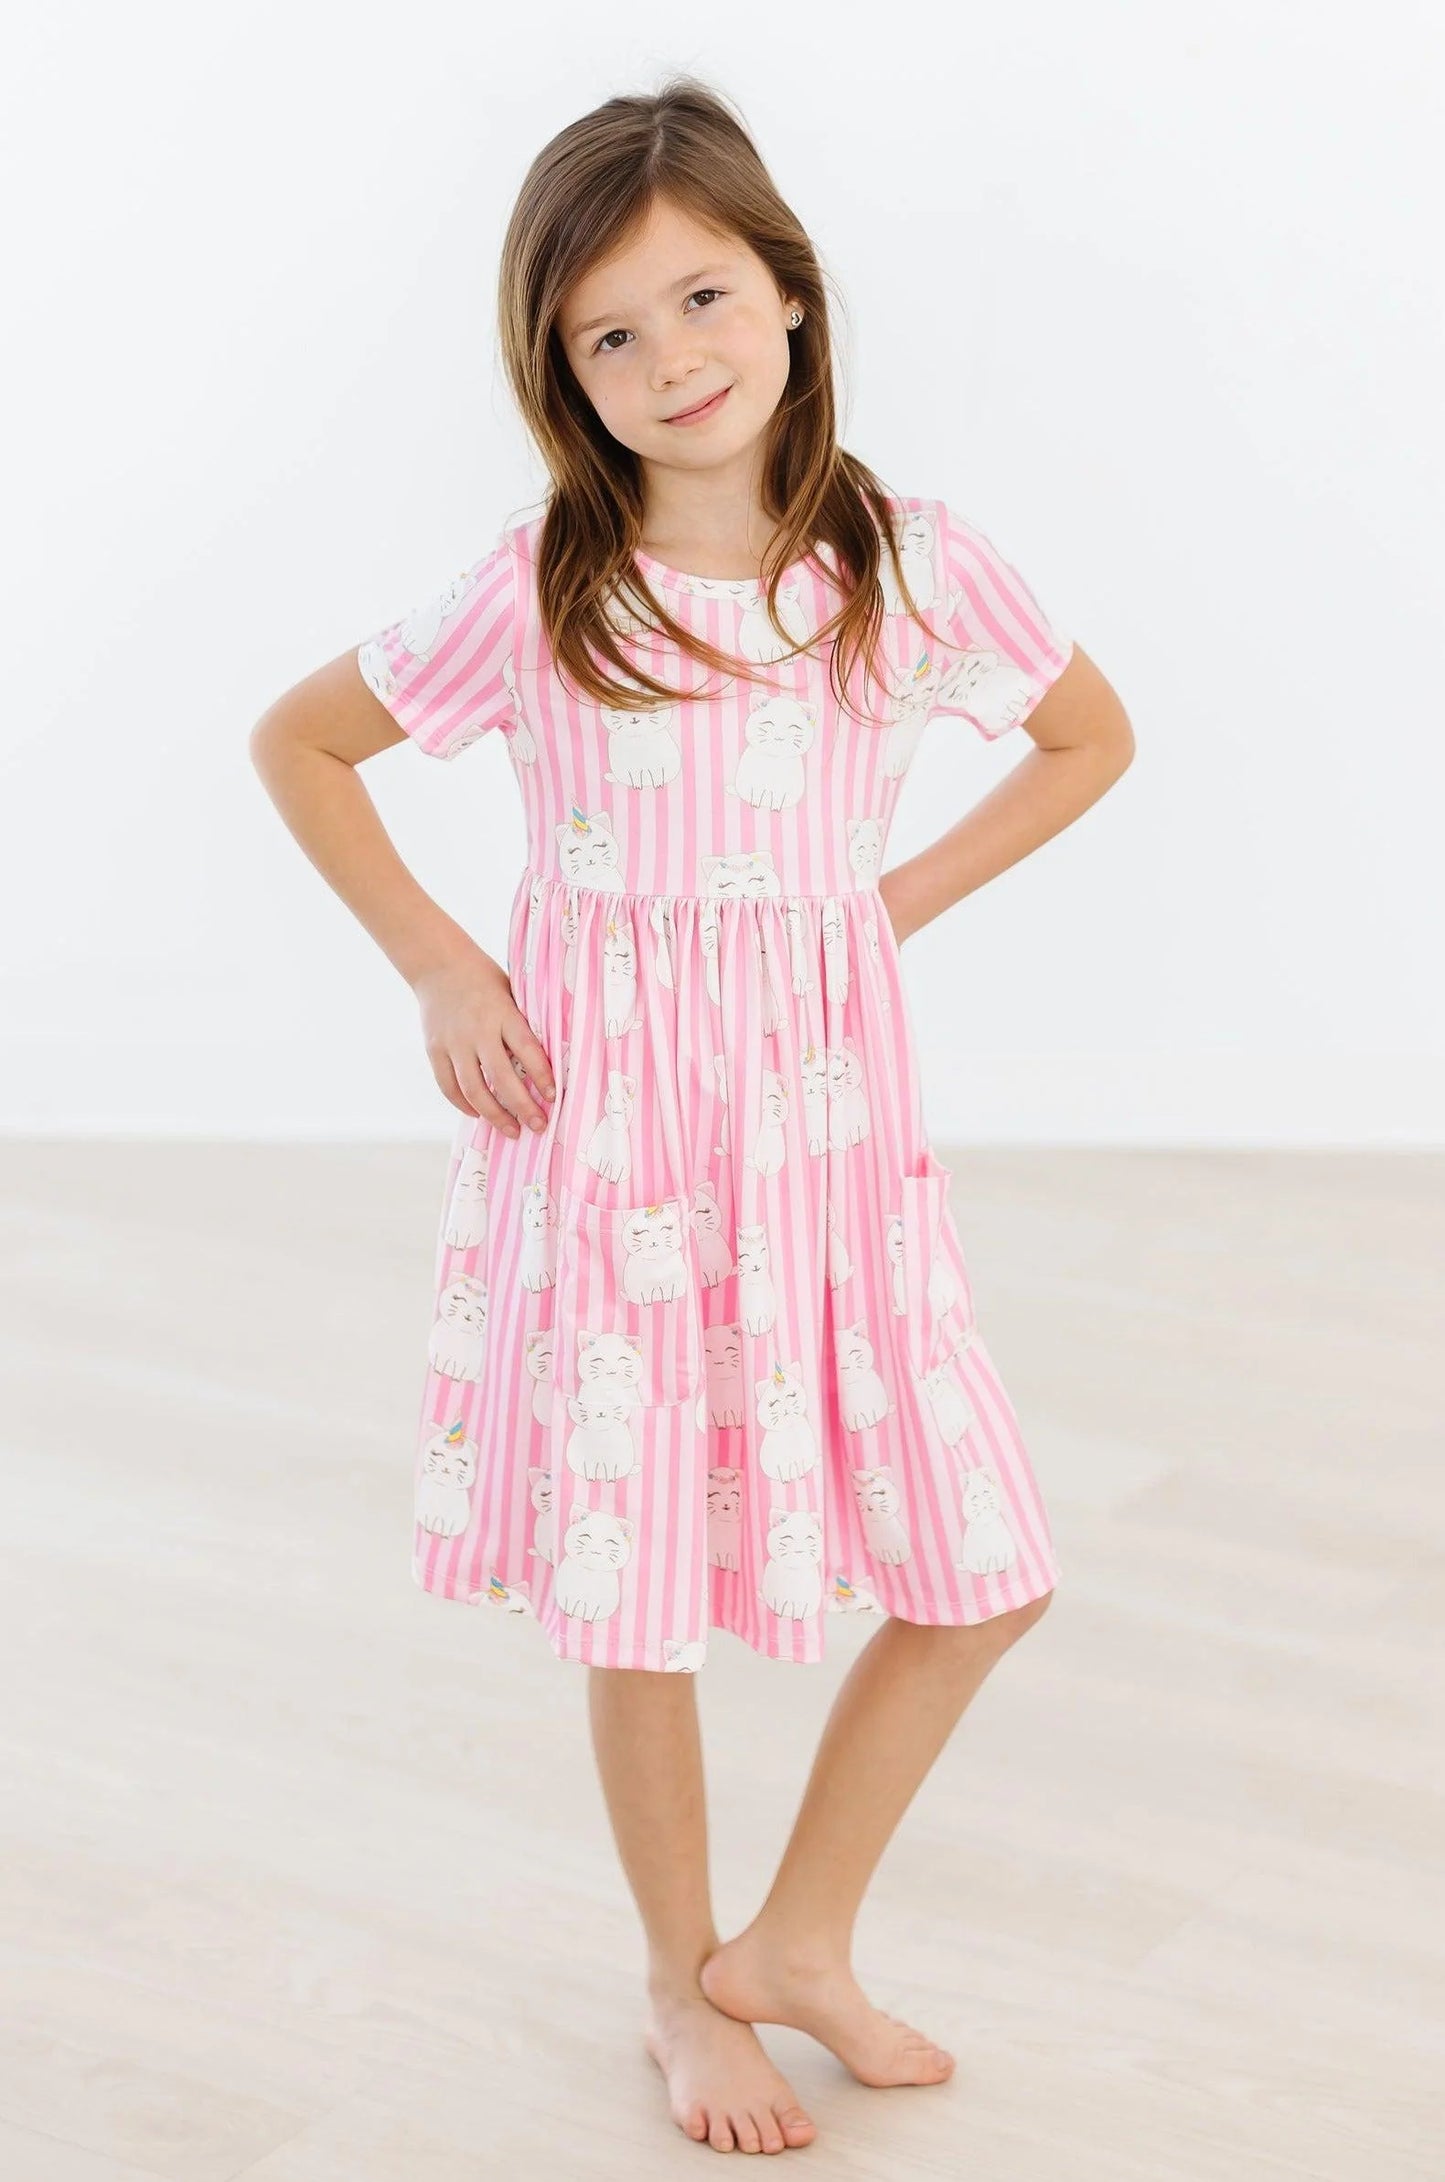 Kittycorn Pocket Twirl Dress by Mila & Rose